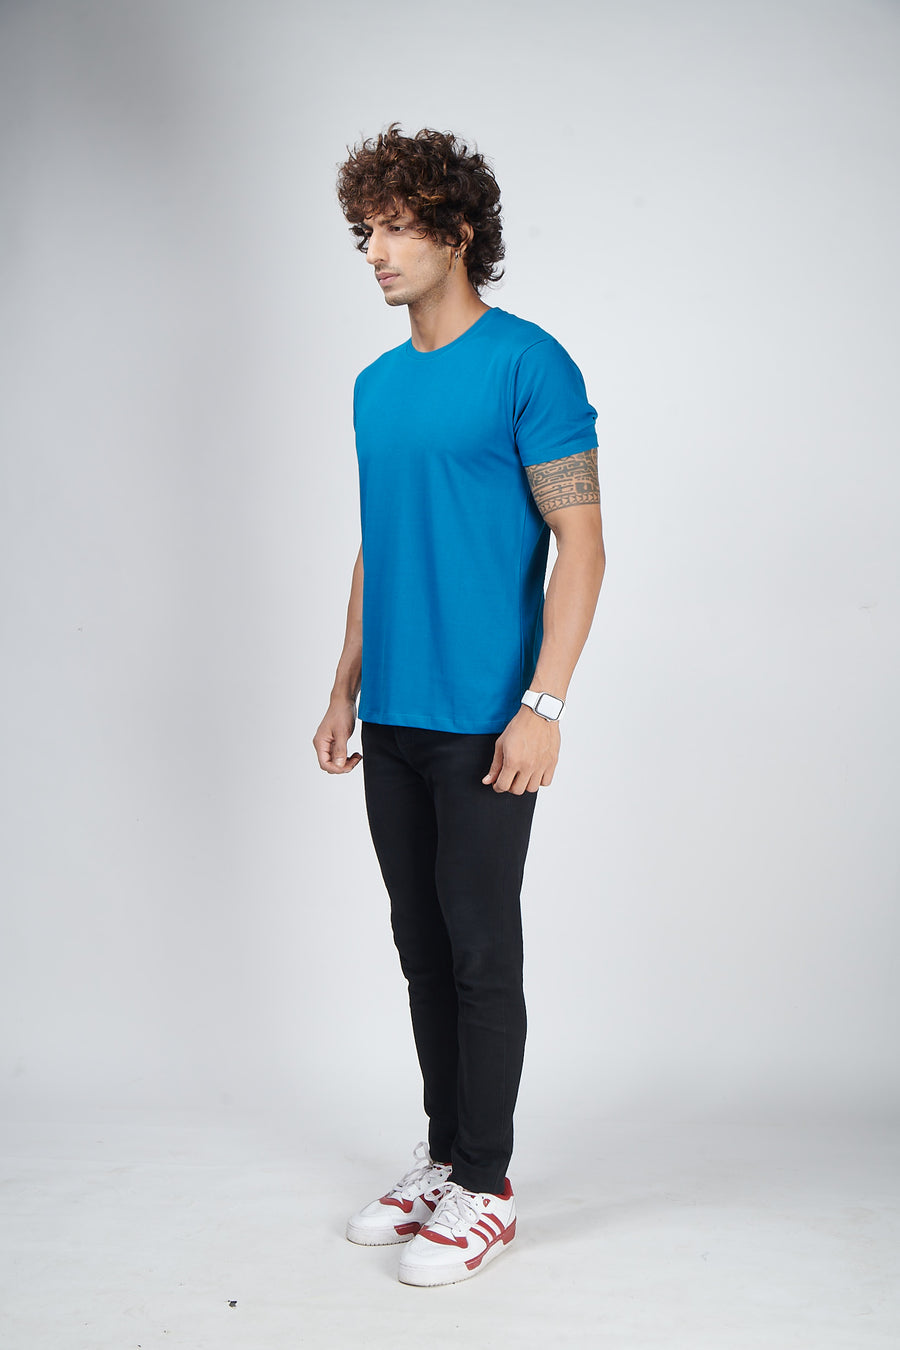 SeaPort Blue Half Sleeve T-Shirt